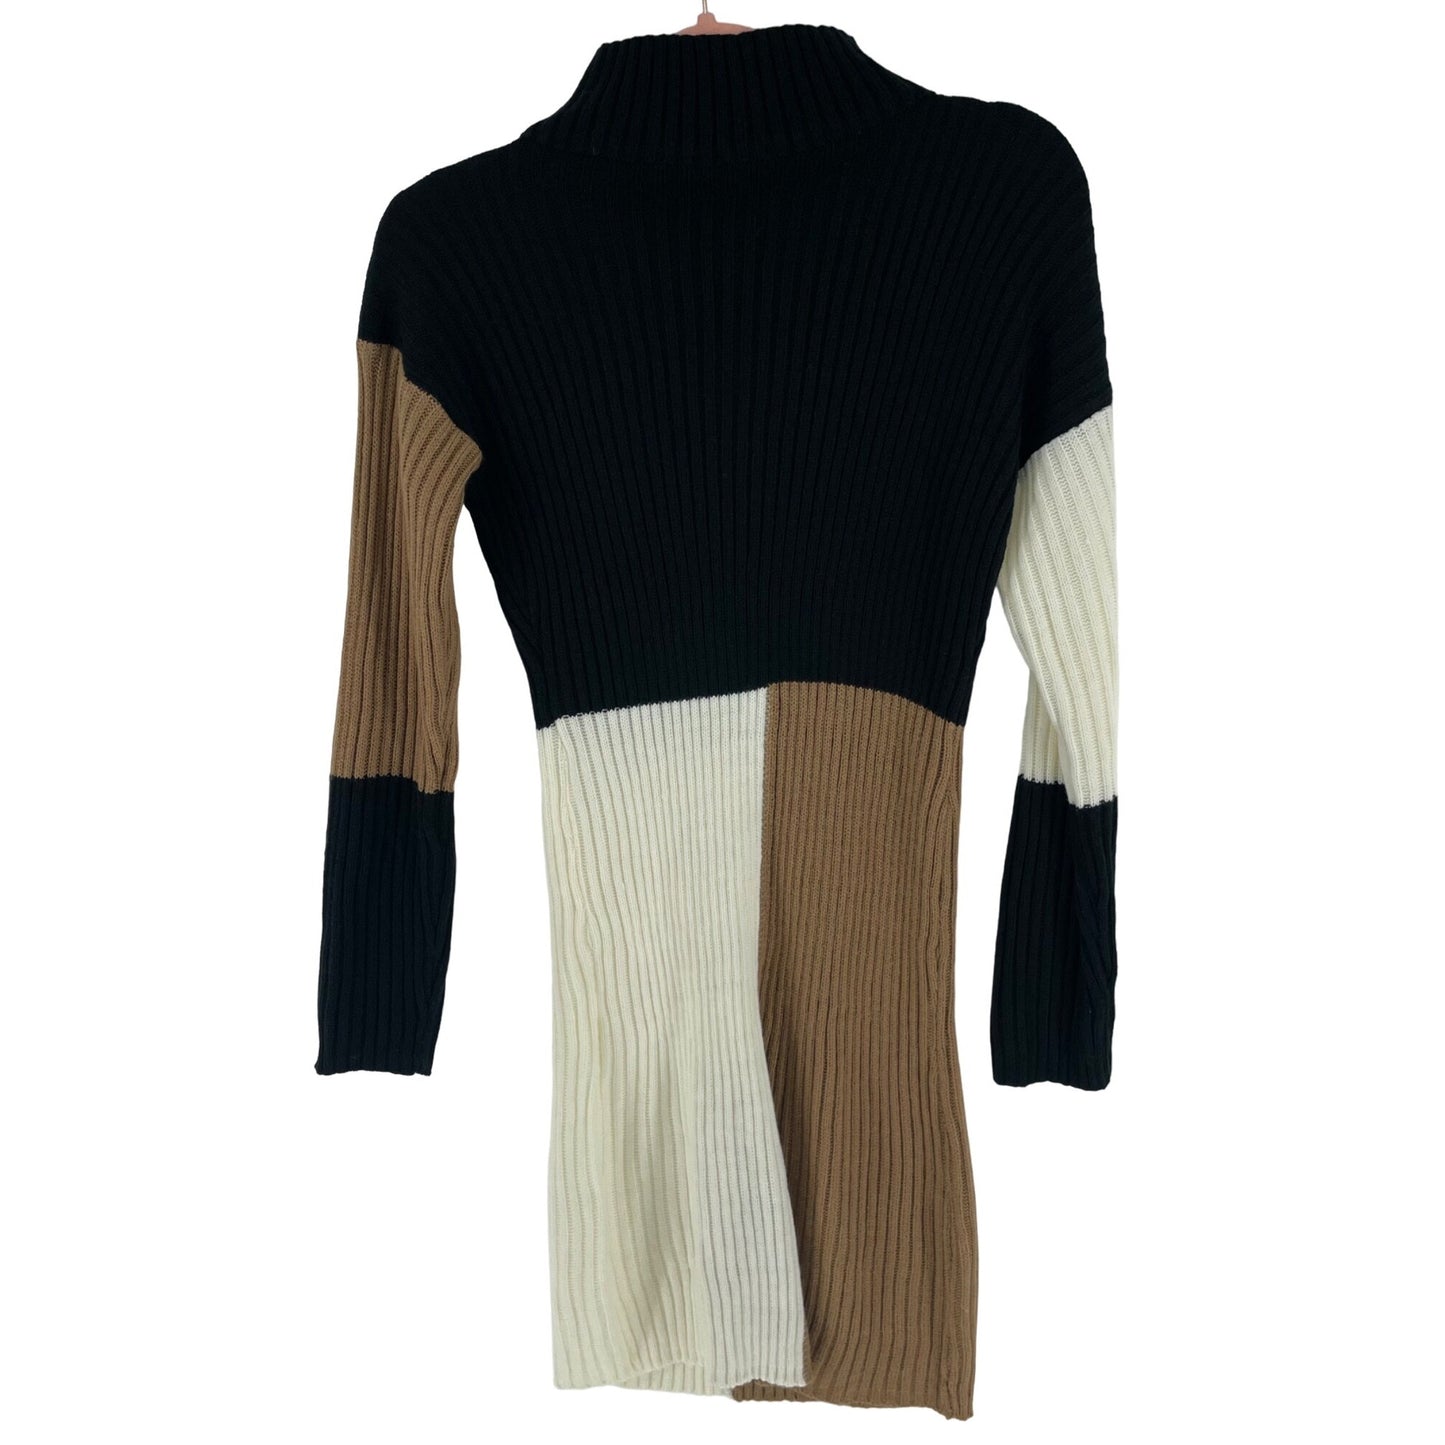 Shein Women's Size Medium Black/Tan/Cream Color Black Sweater Mini Dress